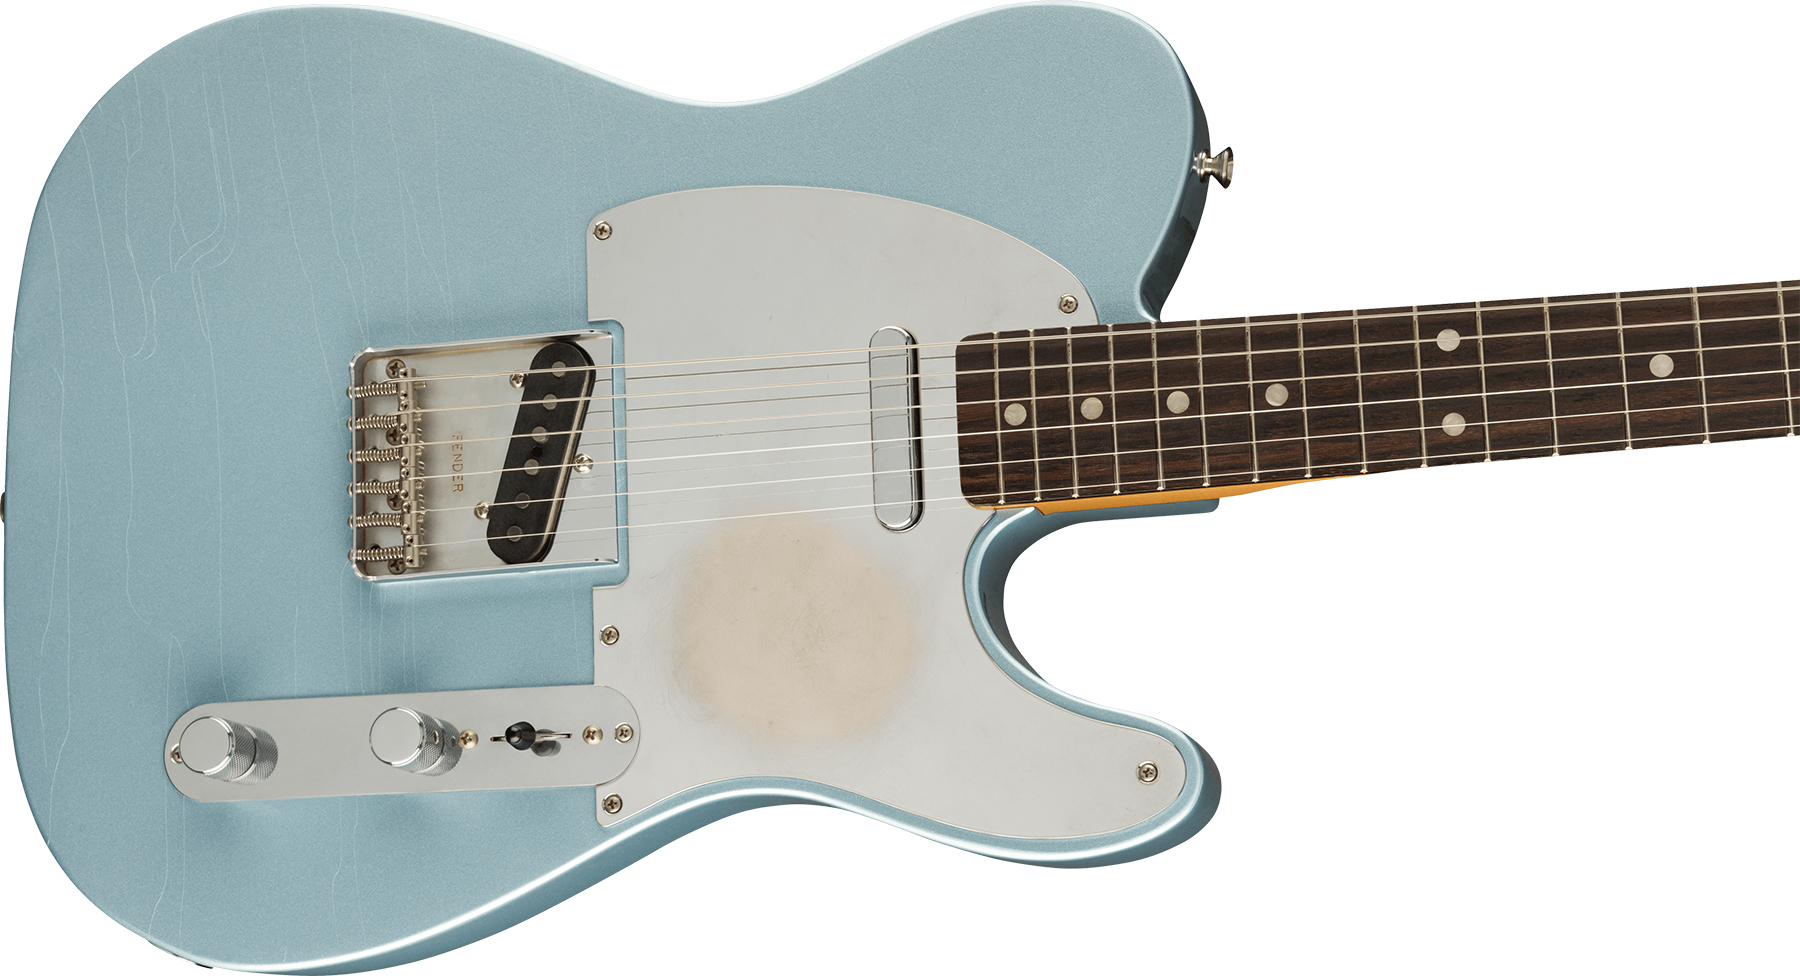 Fender Chrissie Hynde Tele Signature Mex Rw - Road Worn Faded Ice Blue Metallic - Tel shape electric guitar - Variation 2